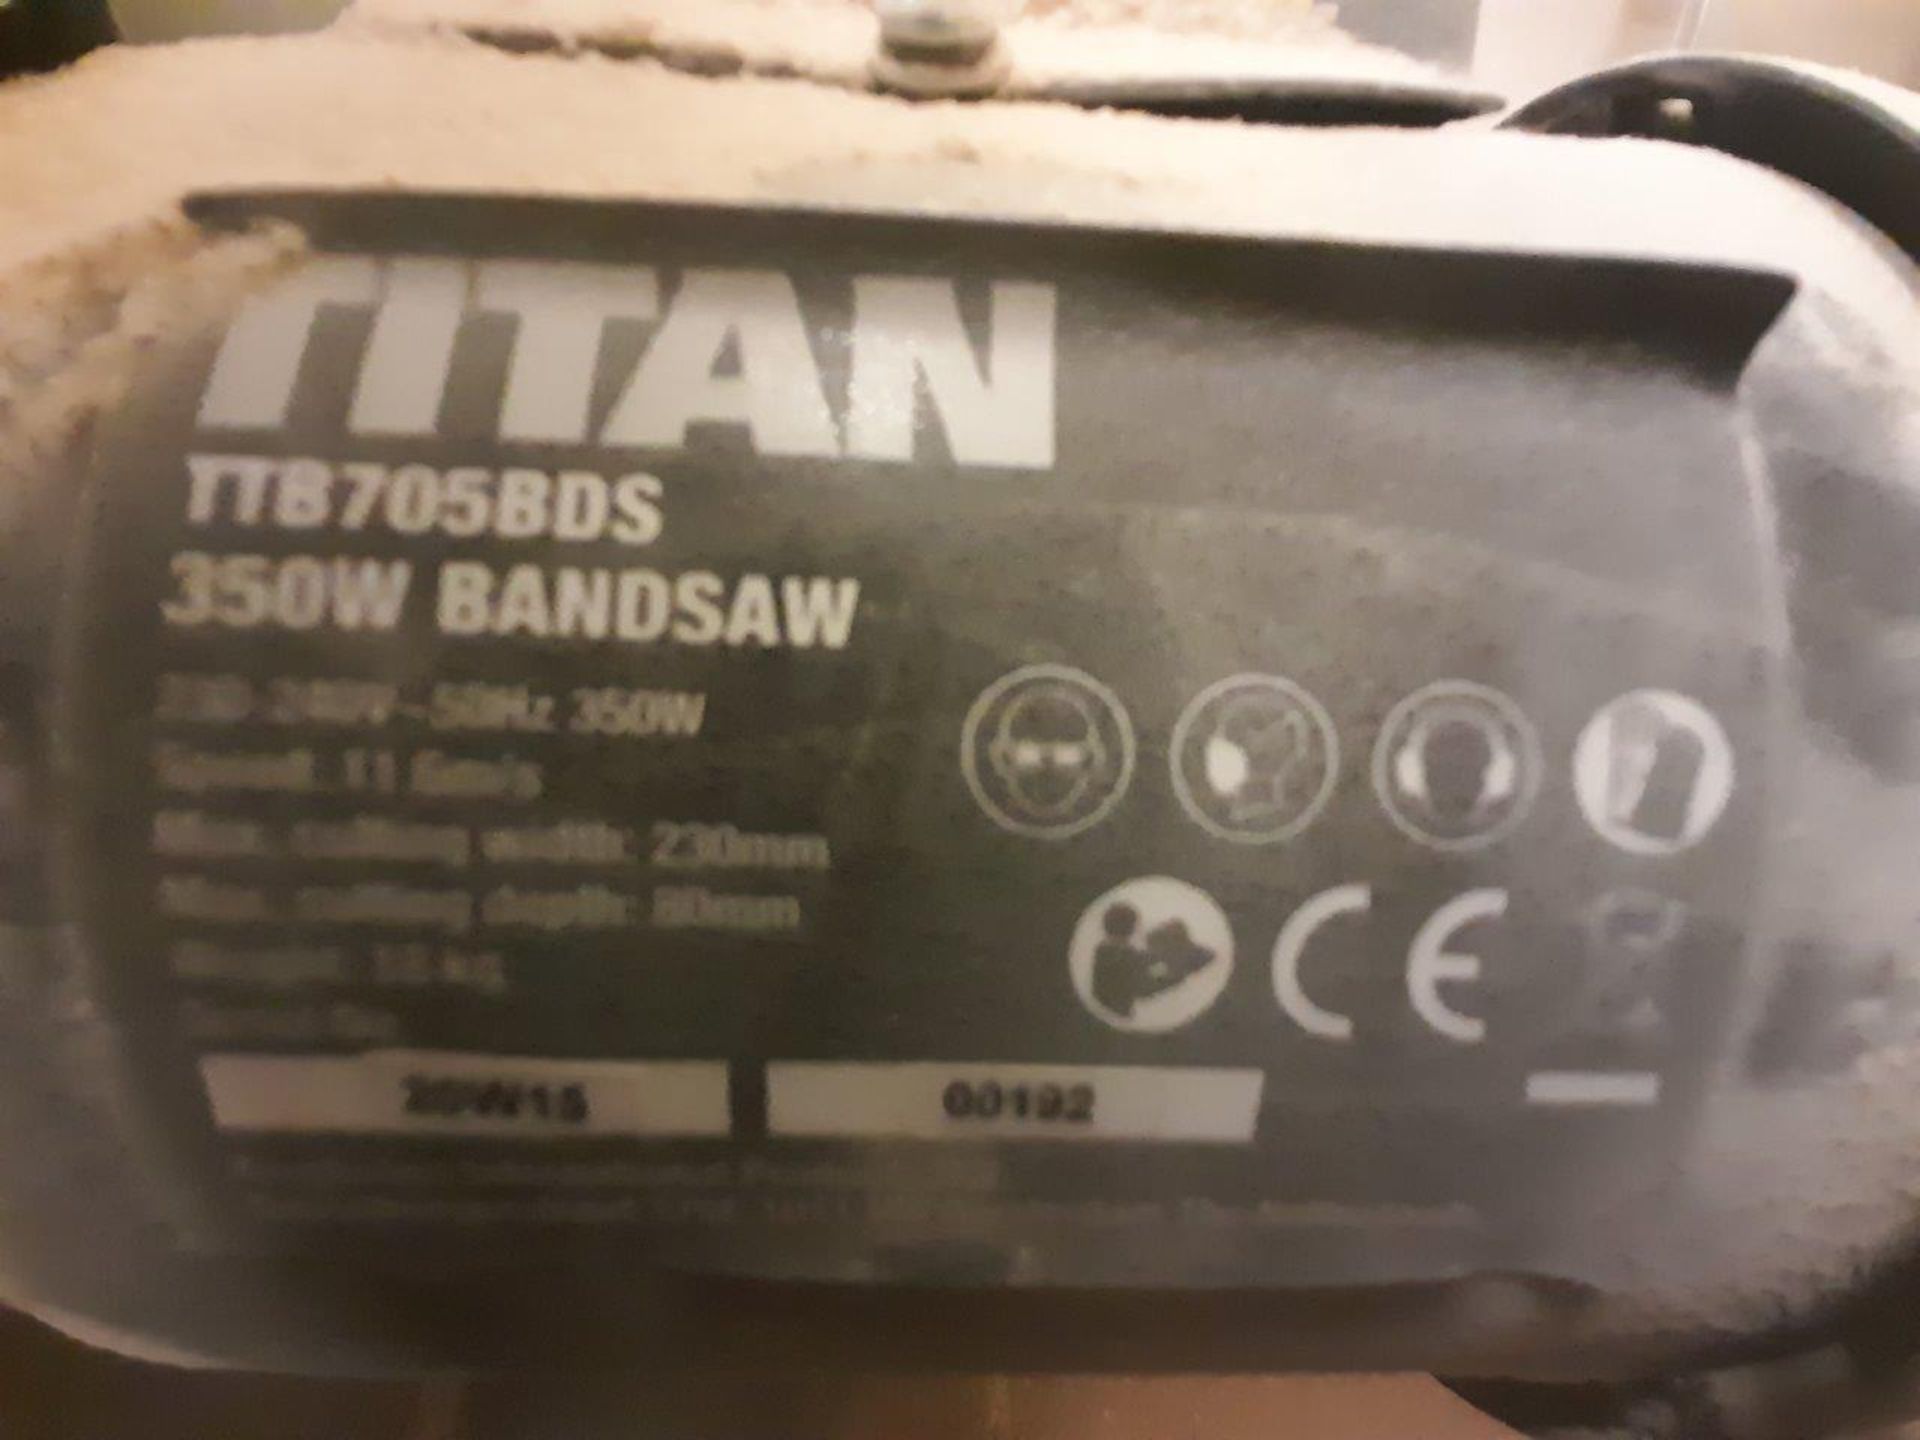 Titan TTB705BDS bandsaw - Image 5 of 5